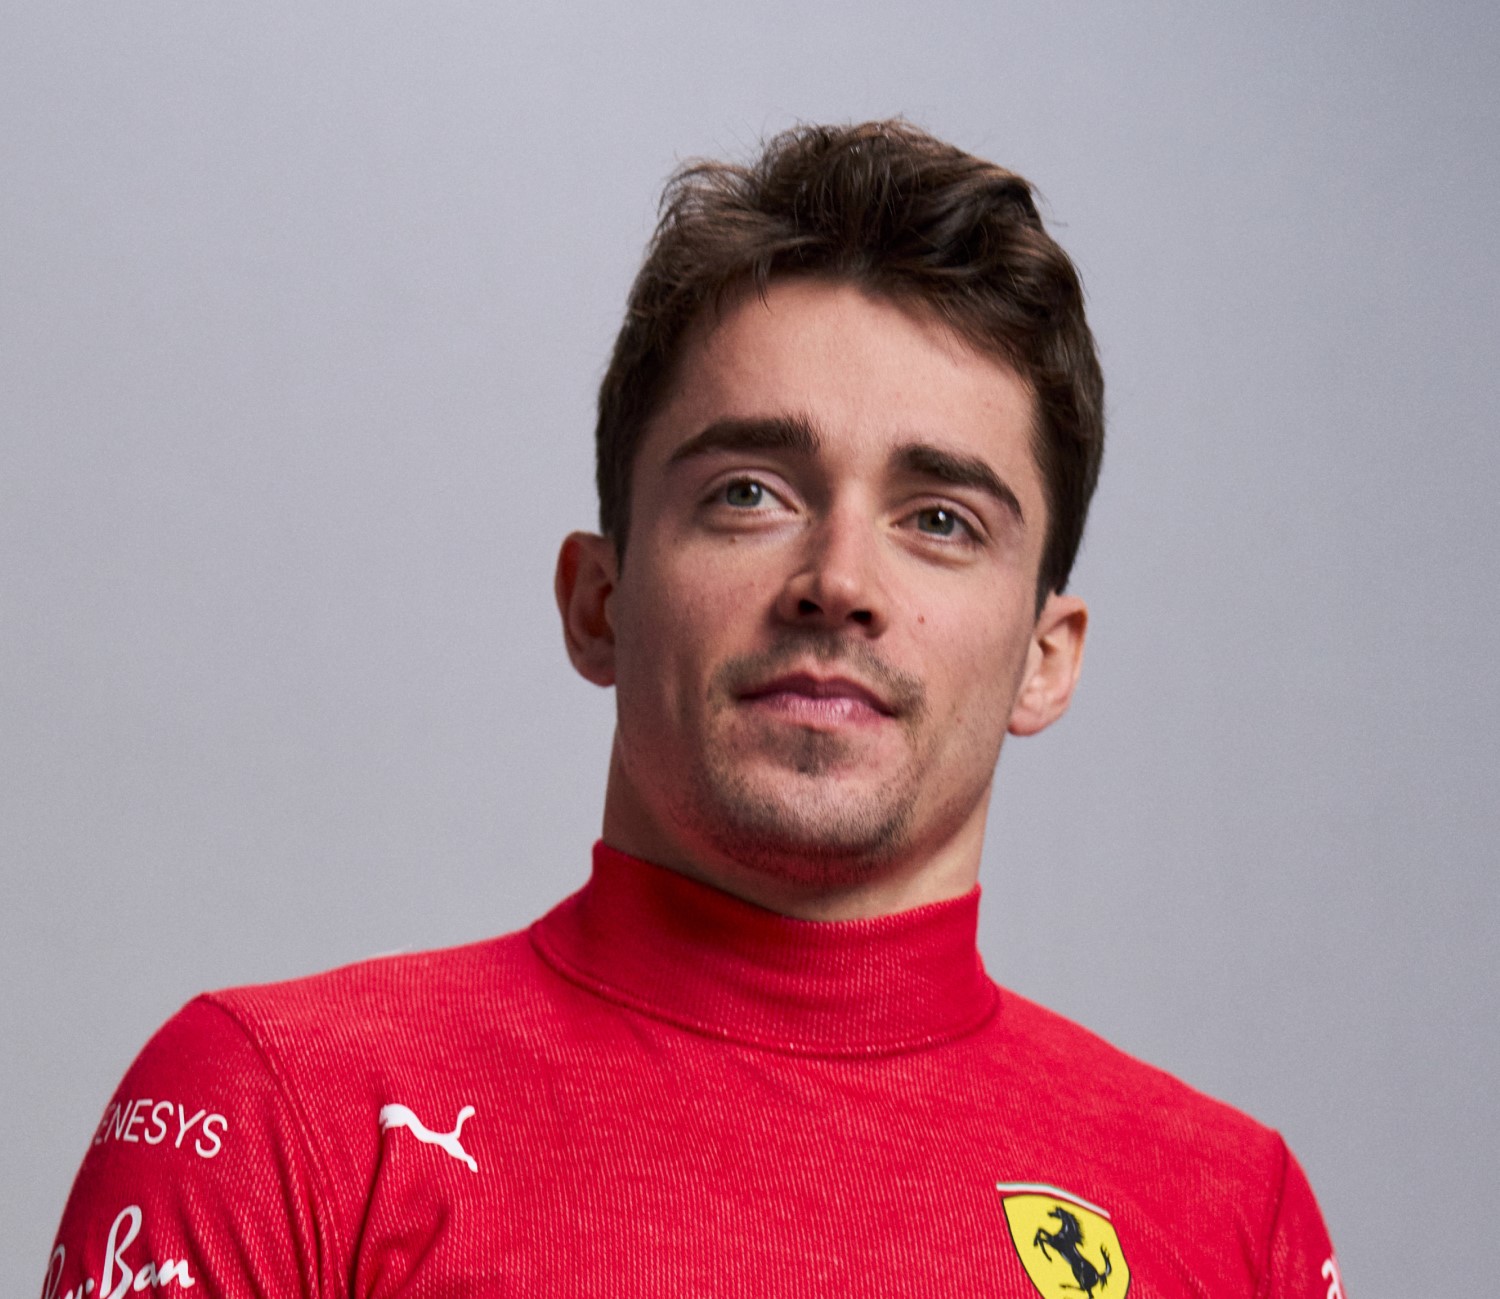 Charles Leclerc, driver of the #16 Ferrari